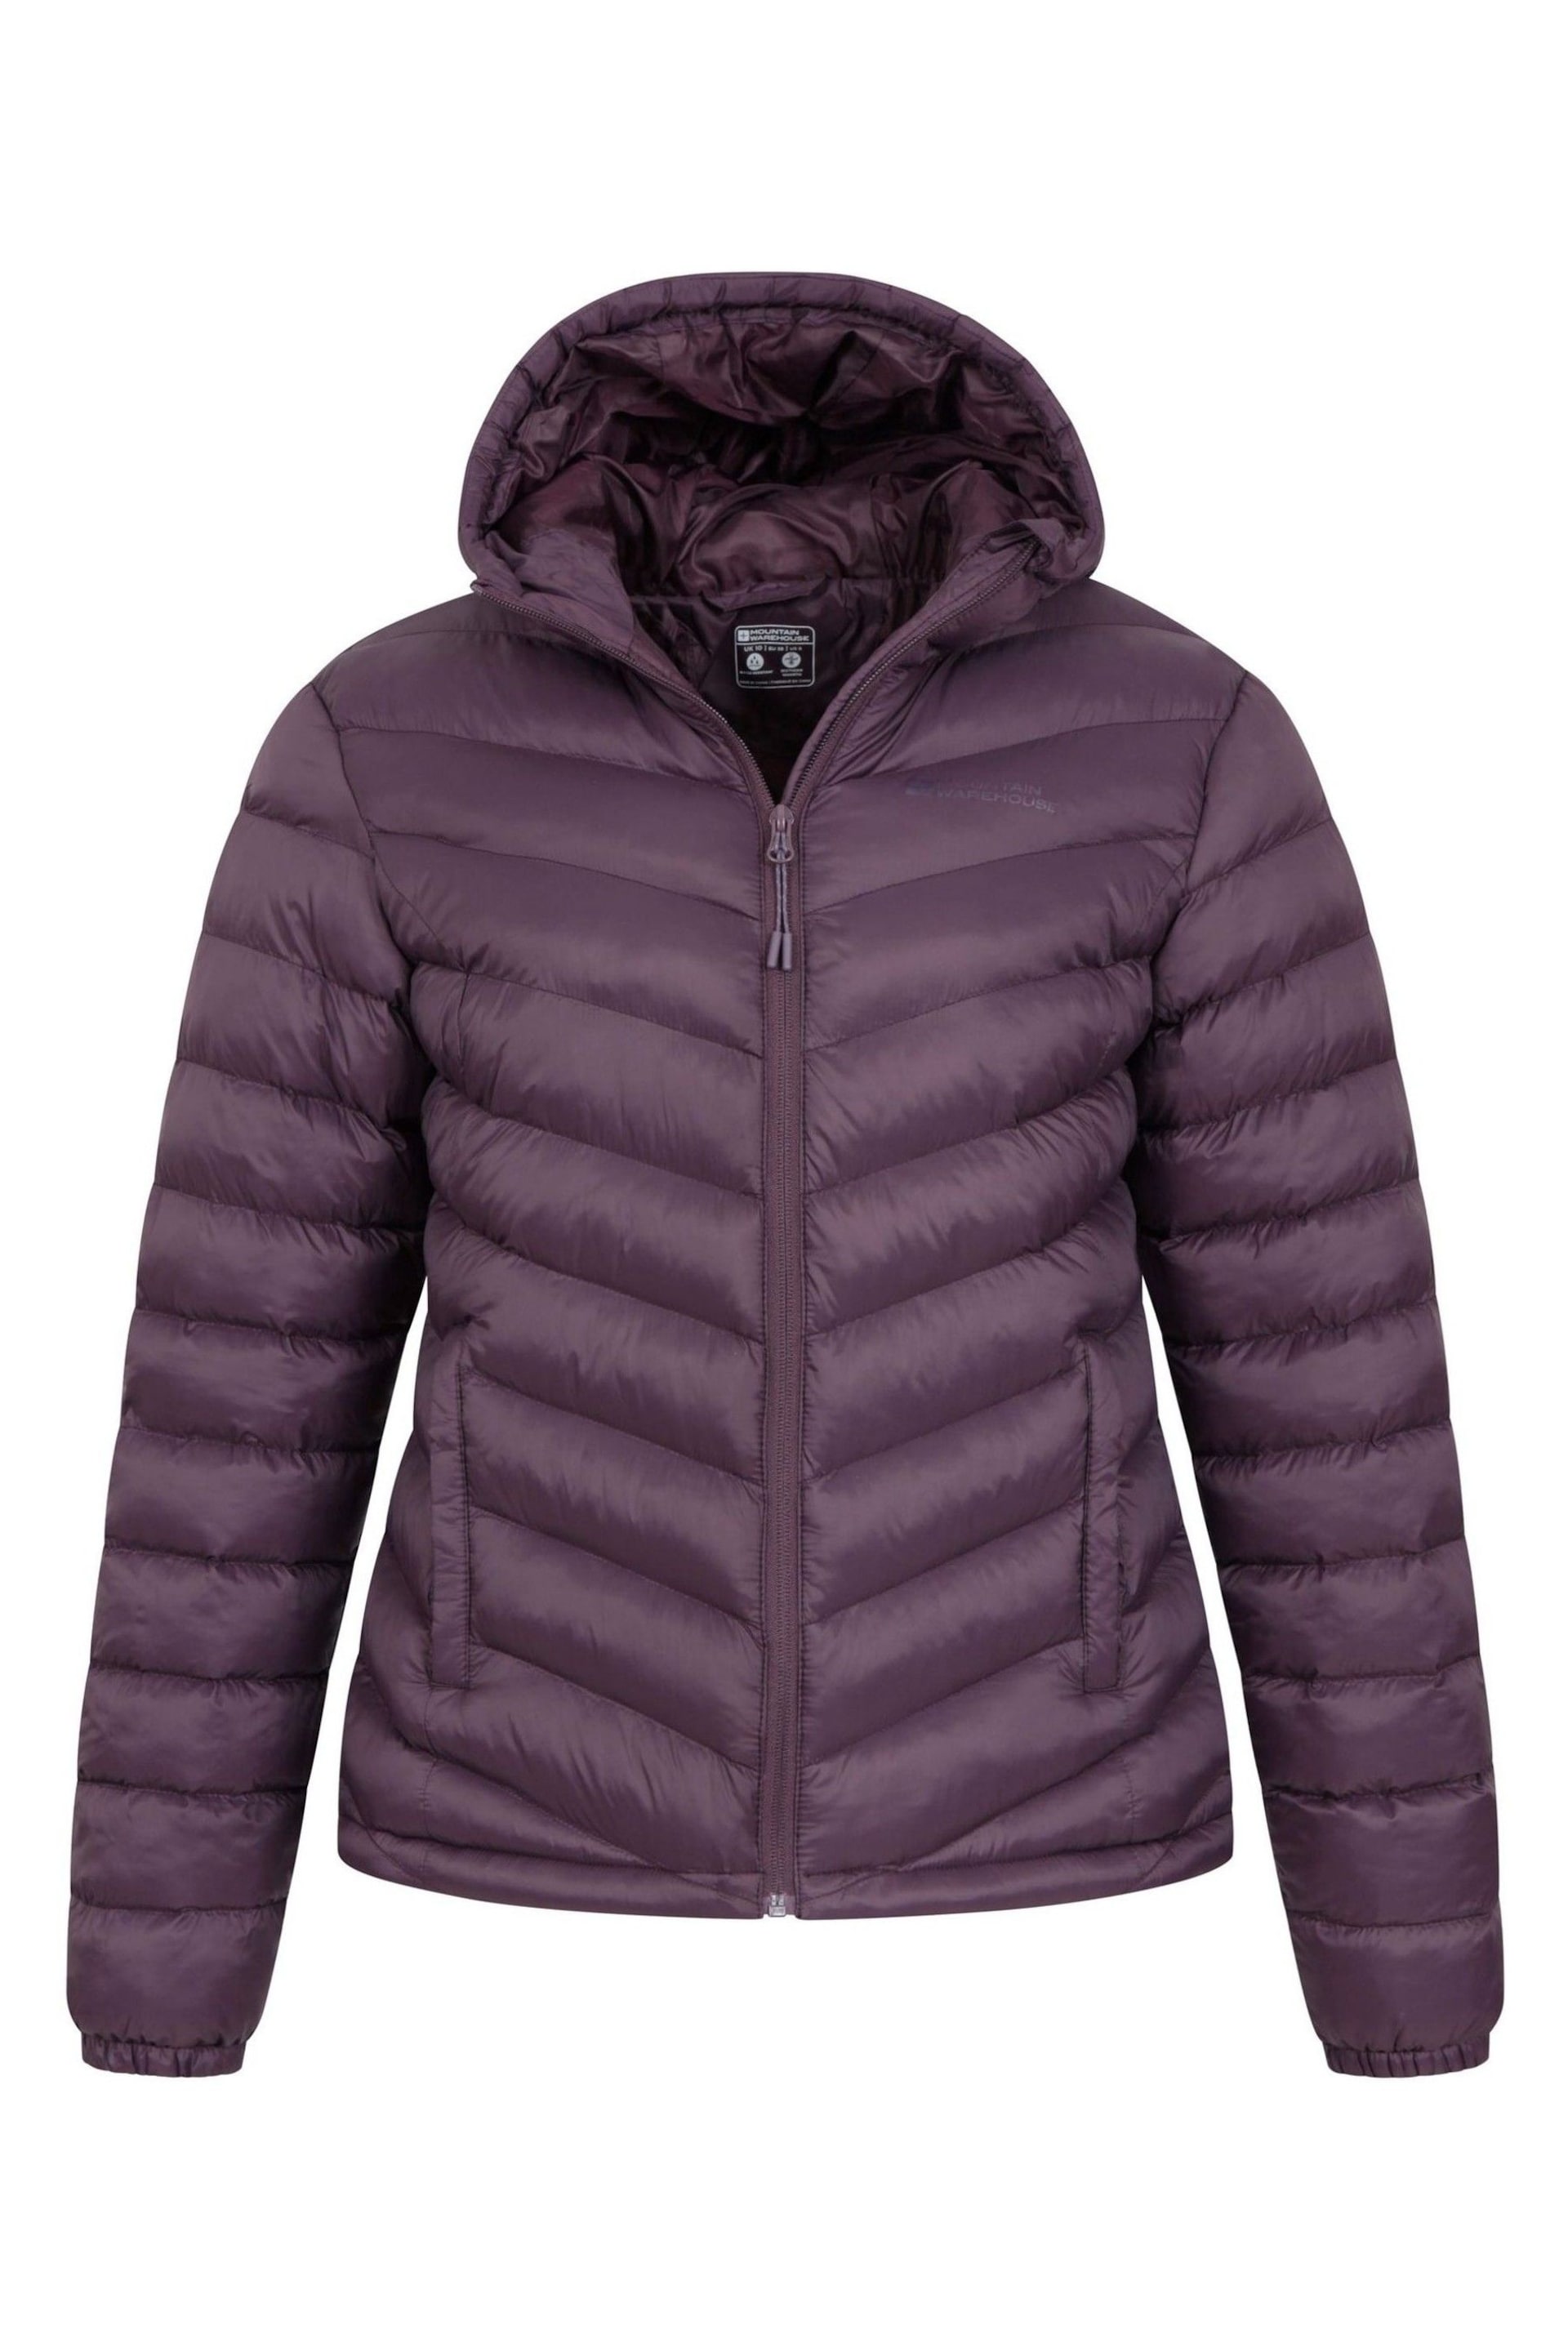 Mountain Warehouse Purple Womens Seasons Water Resistant Padded Jacket - Image 3 of 6